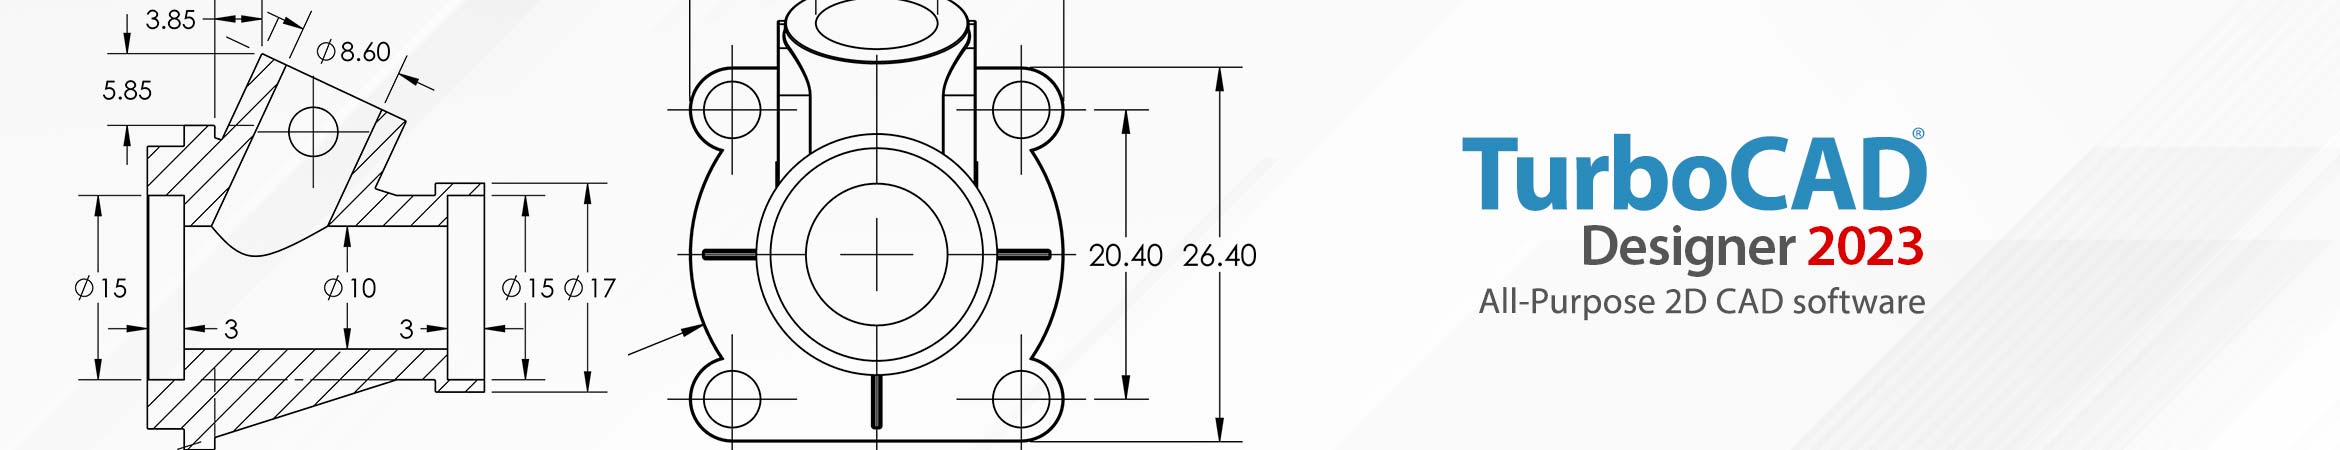 TurboCAD Designer 2D 2023 - All-Purpose 2D CAD Software